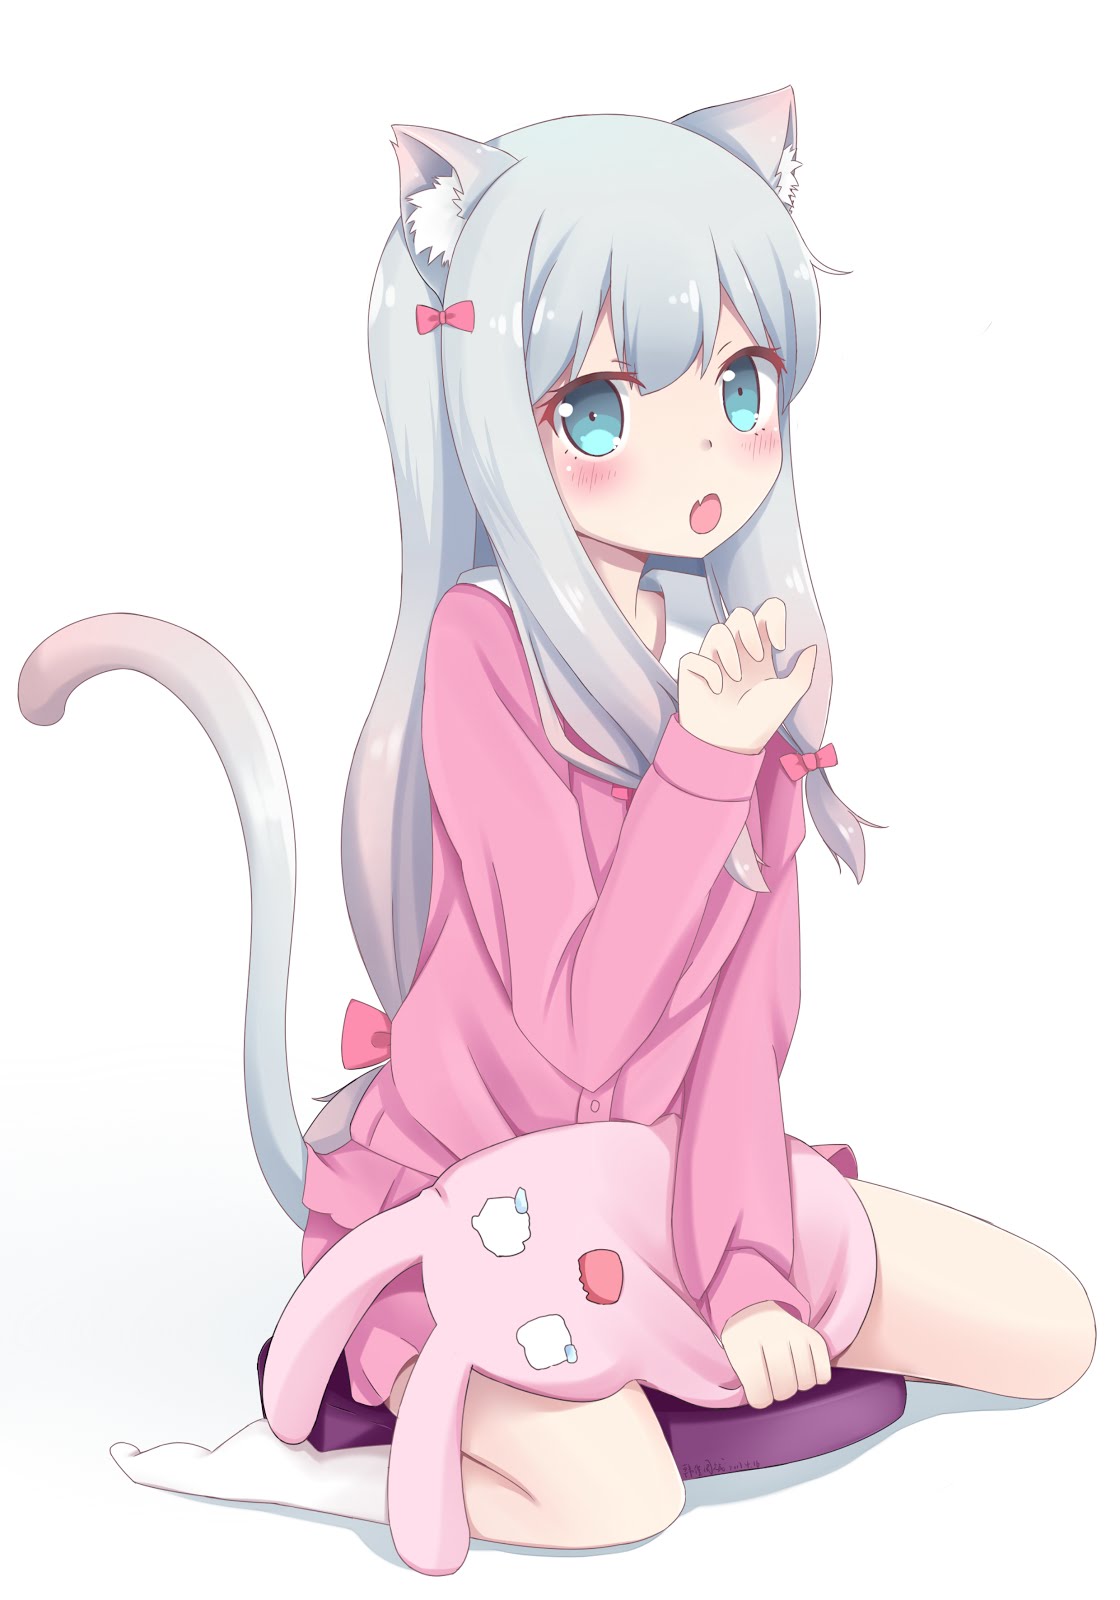 Cat[girl]urday: My little neko sister can't be Eromanga-sensei